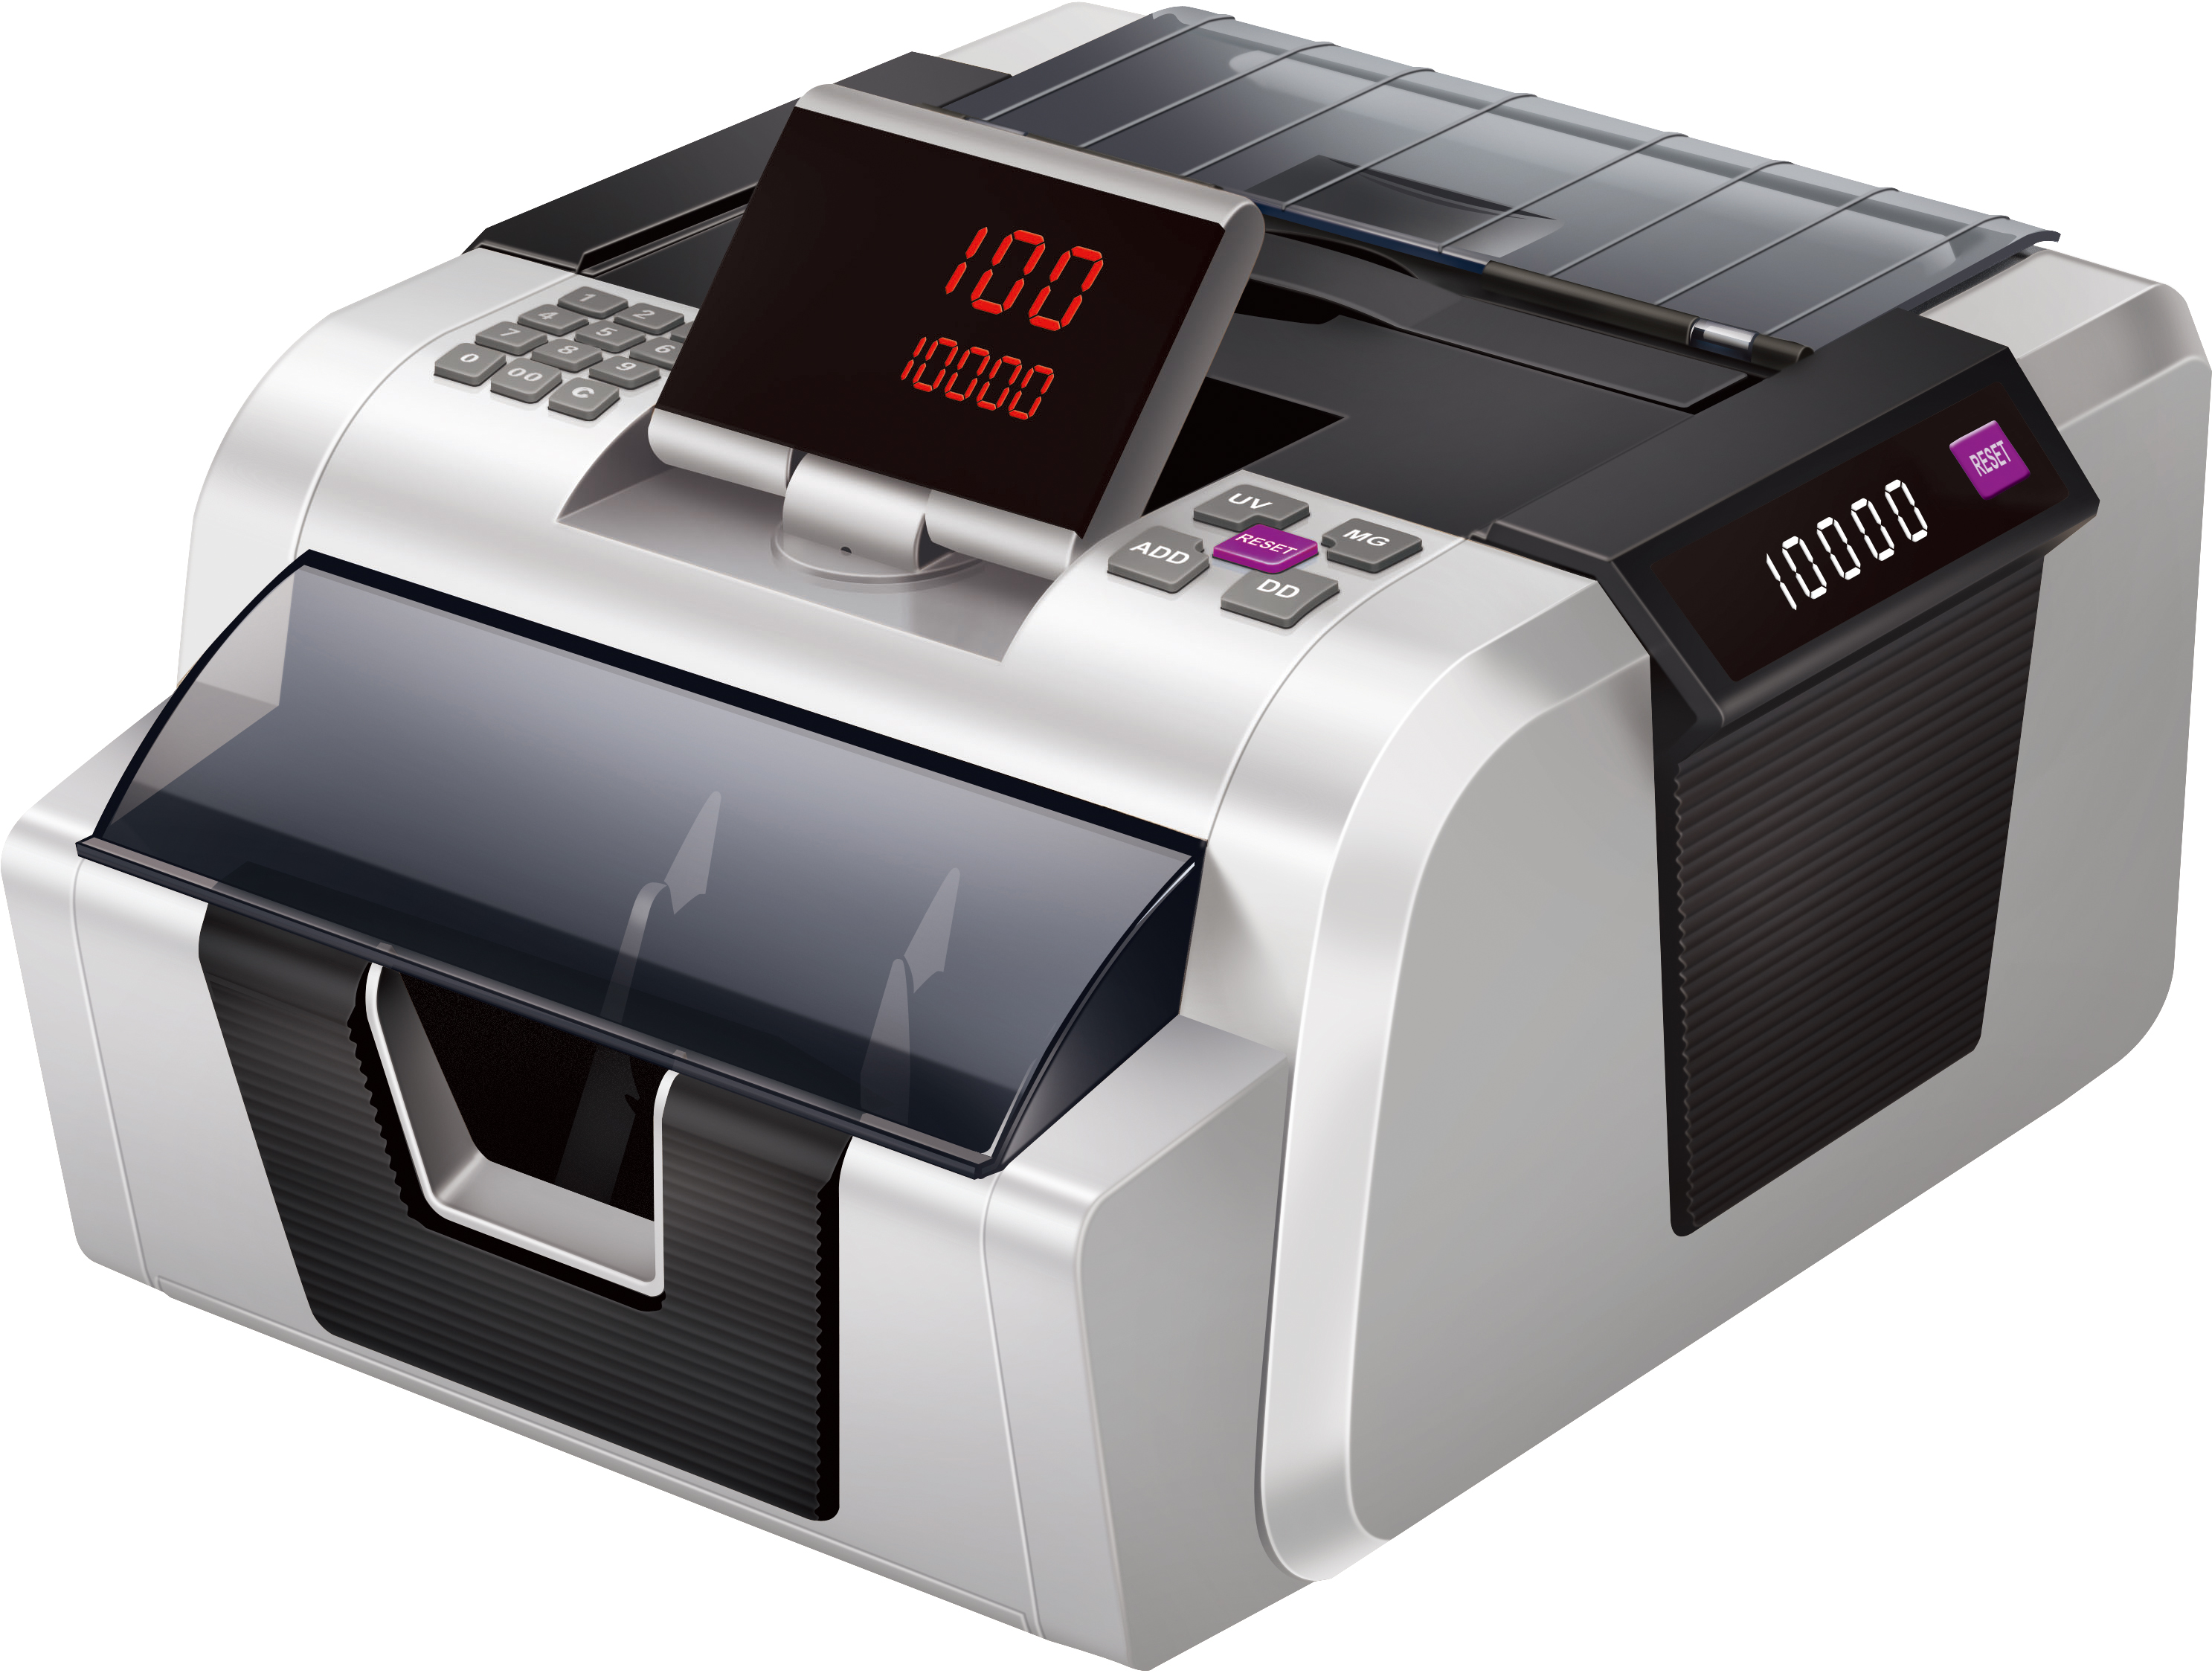 Masina de numarat bani Time saver TS-2900 1500 bancnote / minut Display dublu TS-2900